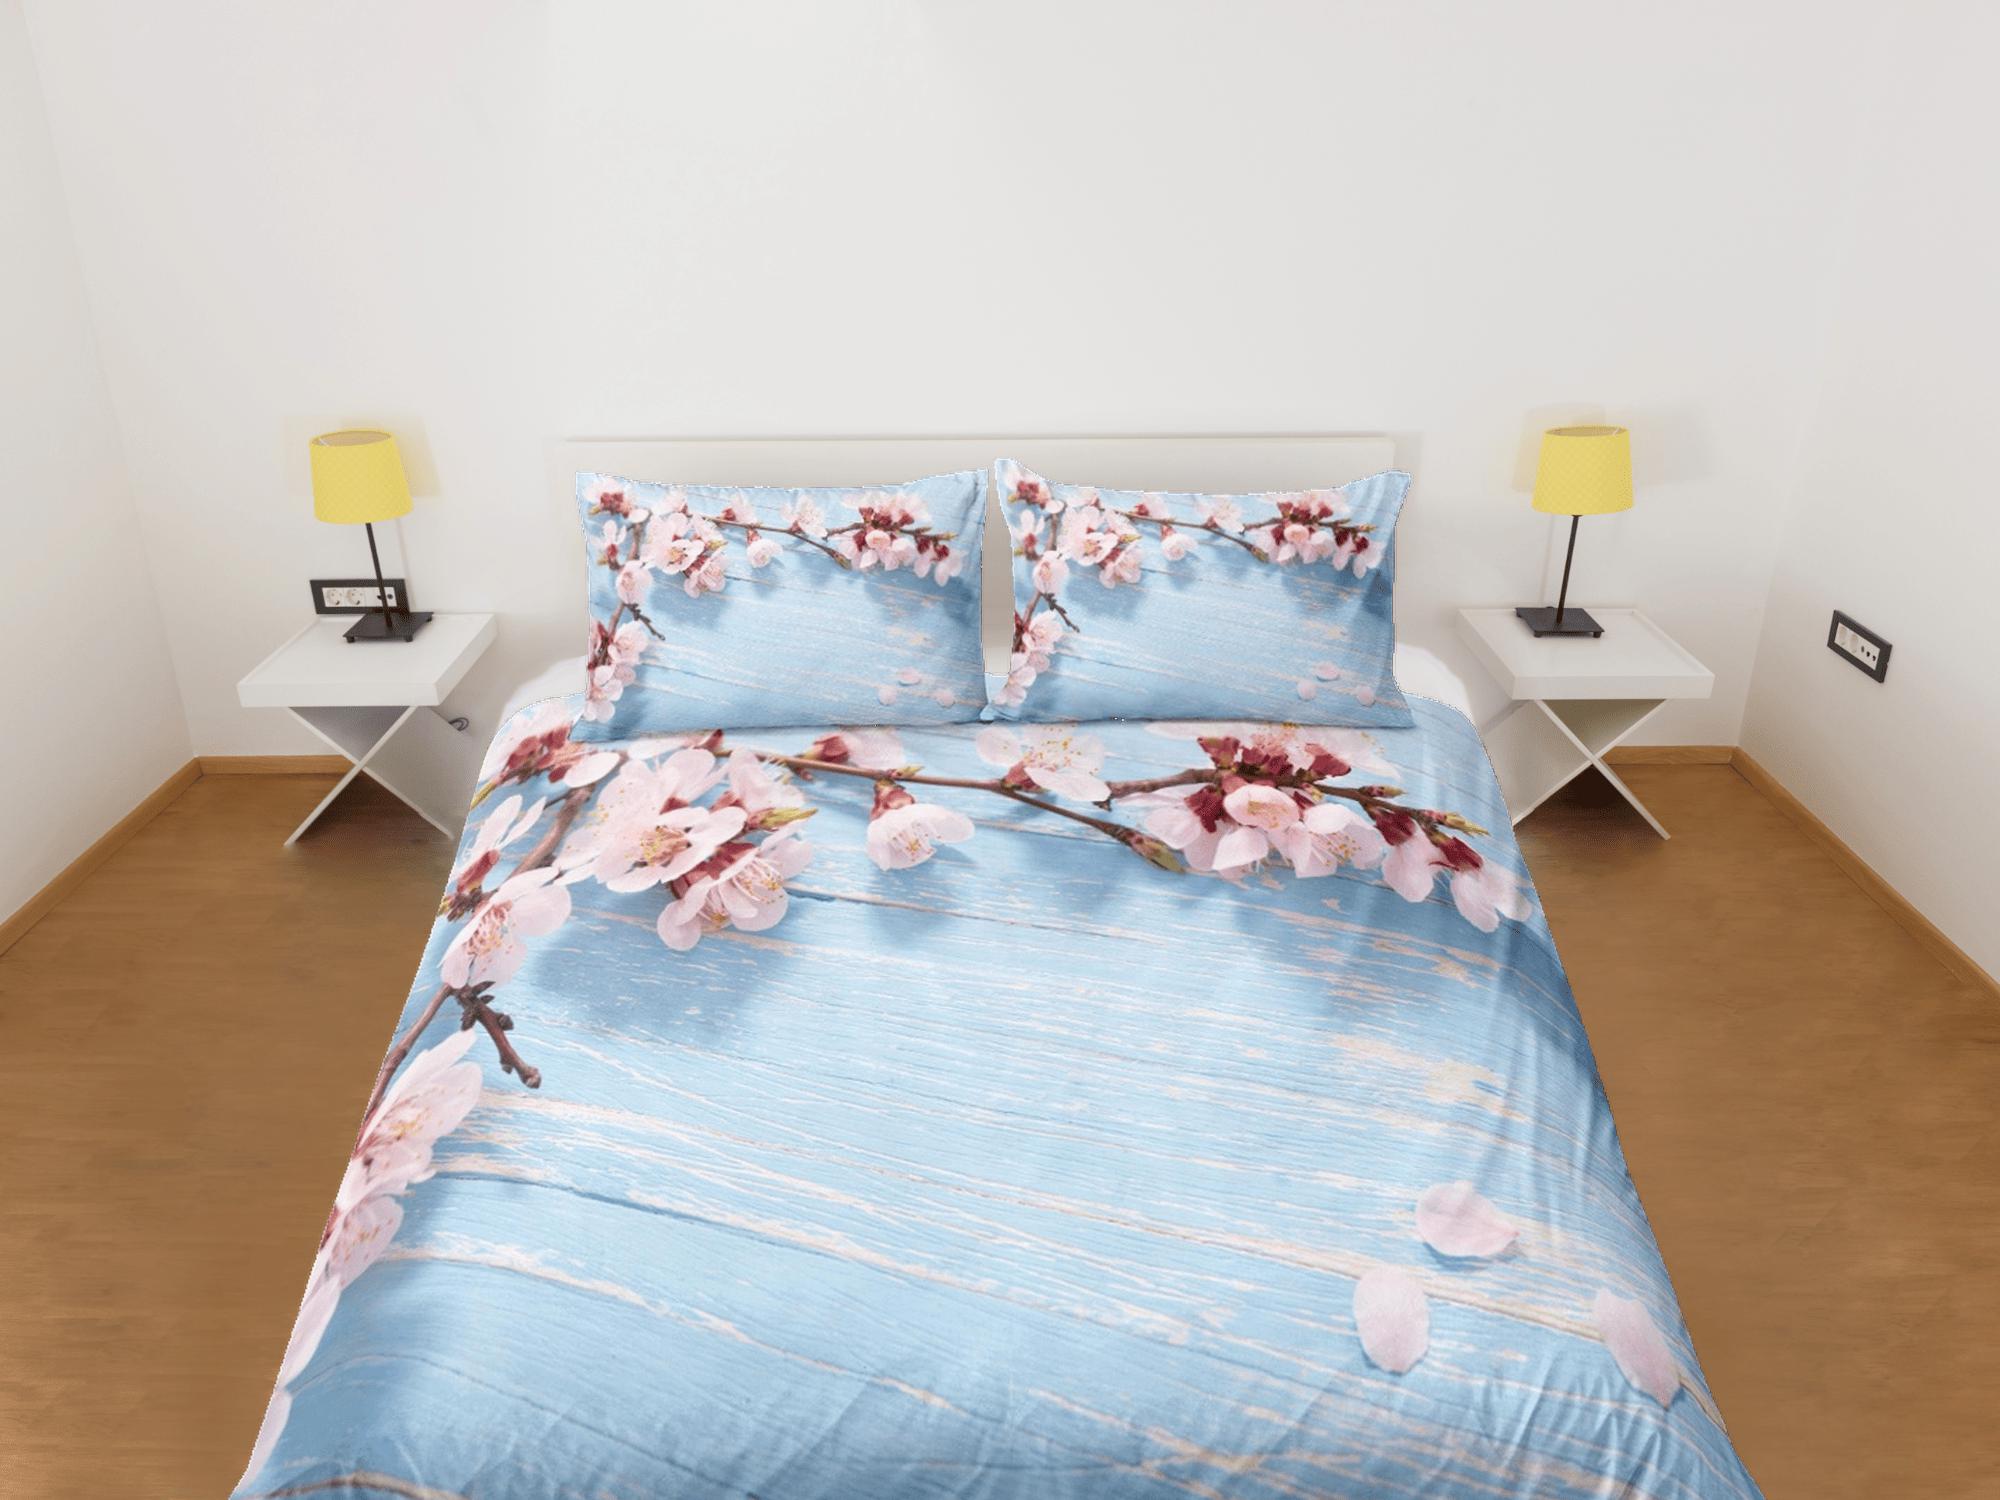 daintyduvet Cherry blossom blue bedding floral prints duvet cover queen, king, boho bedding designer bedspread maximalist full size bedding aesthetic